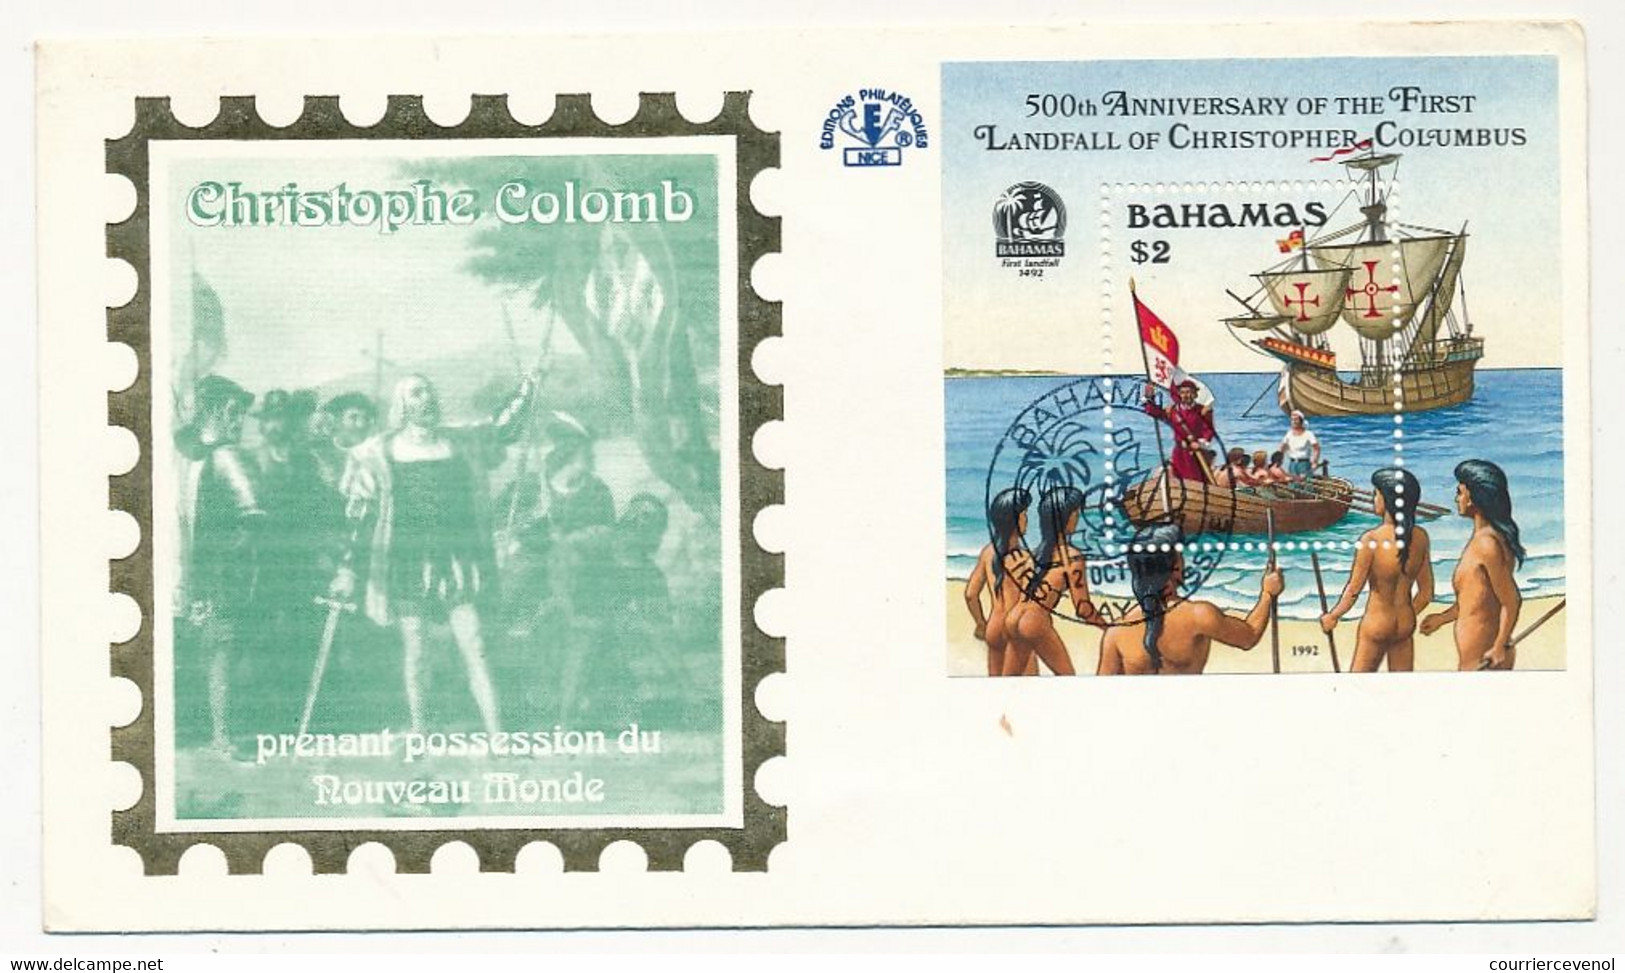 BAHAMAS - Enveloppe FDC - 2$ 500eme Anniversaire De Christophe Colomb - 12 Oct 1982 - Grenade (1974-...)